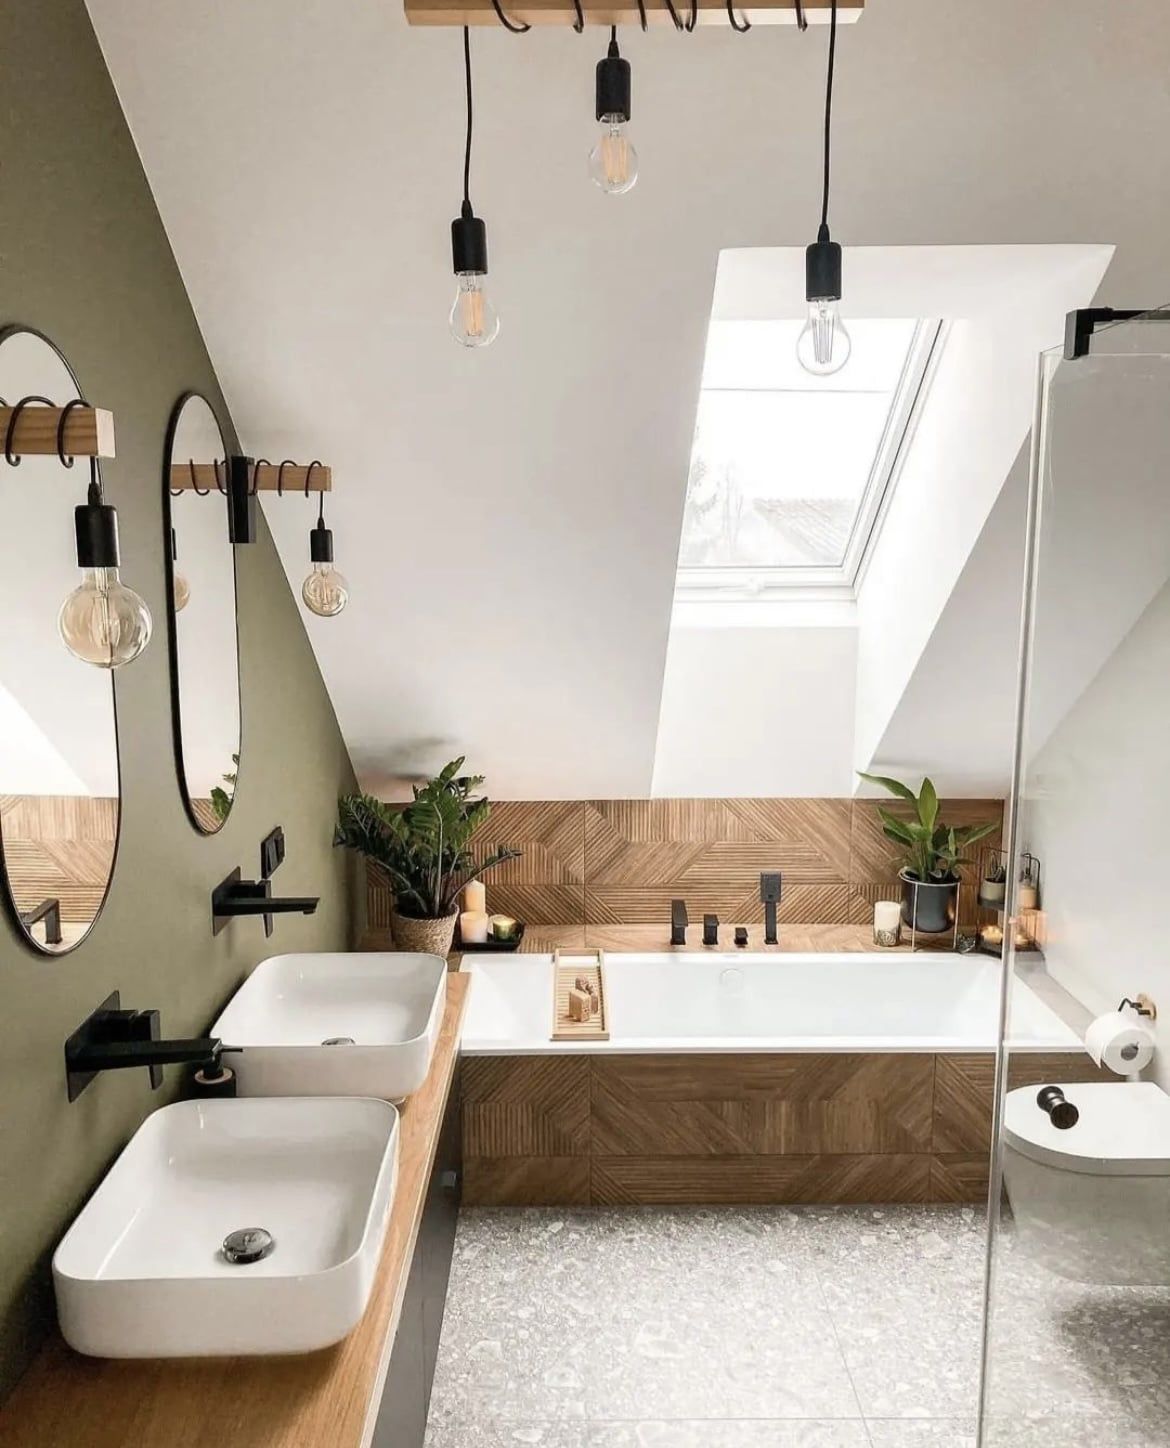 Ceiling Bathroom : The Benefits of Installing a Ceiling Bathroom Fan